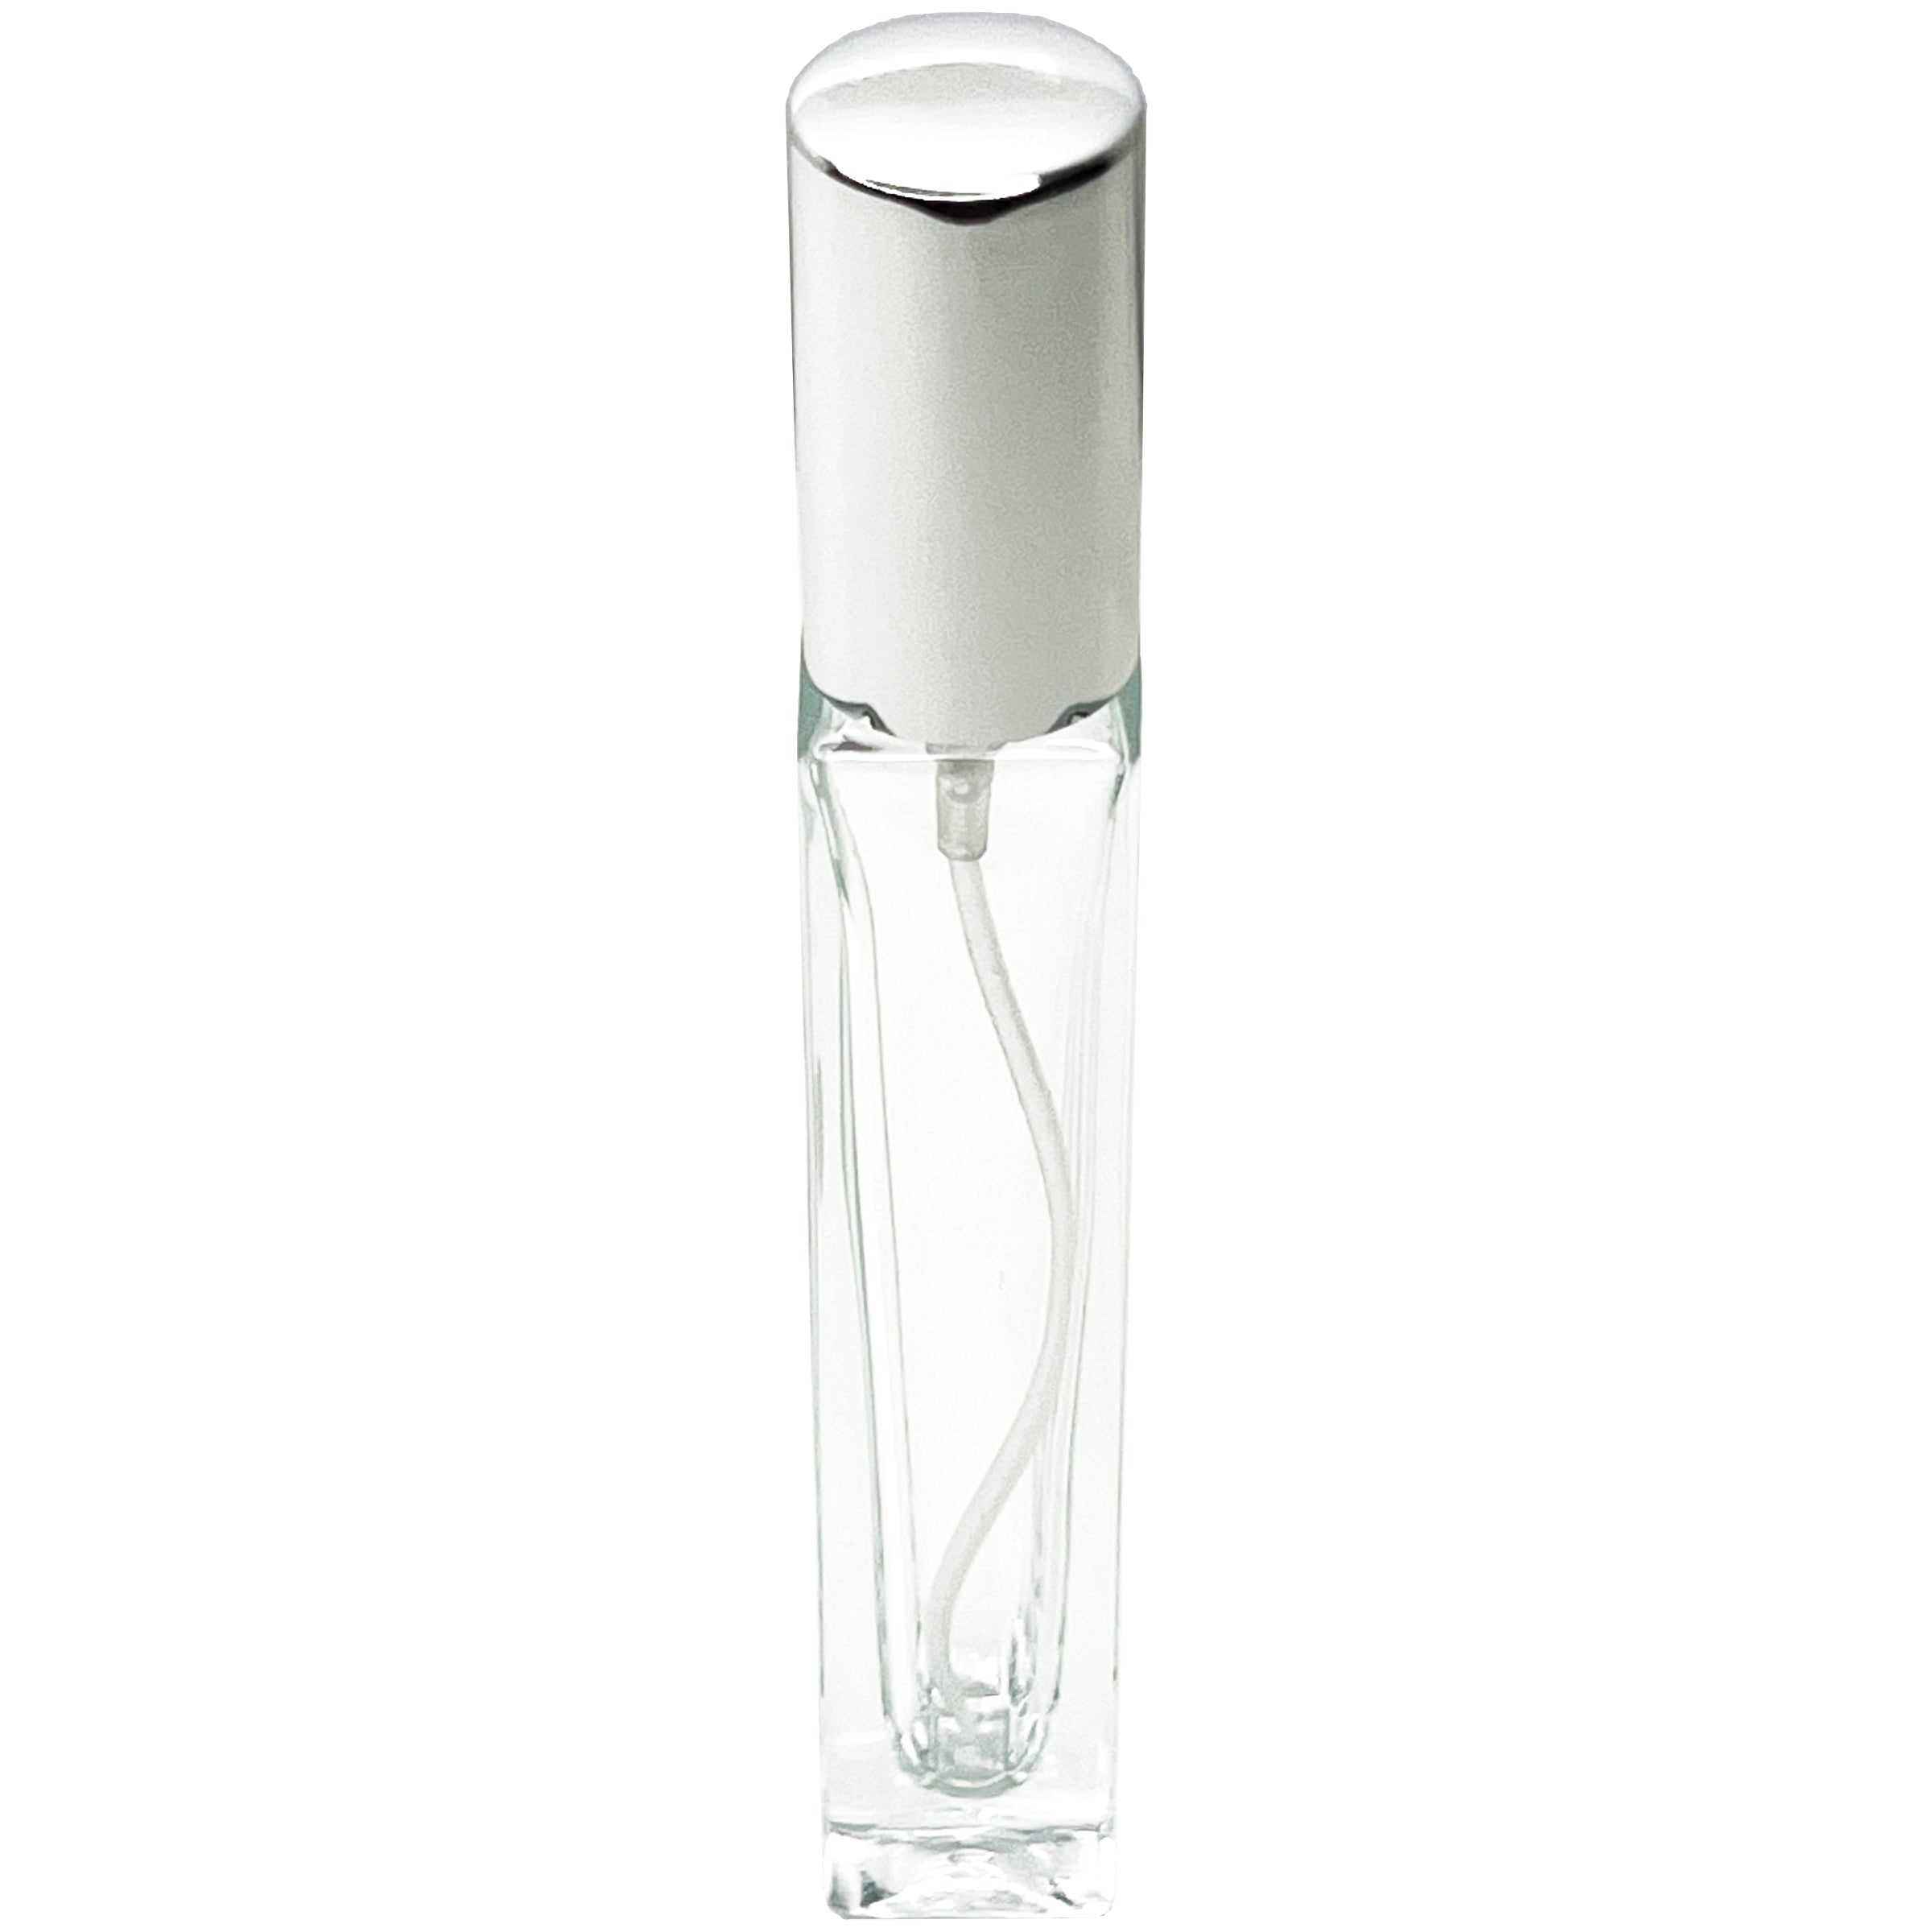 10ml 0.33oz Square Glass Spray Bottle Aluminum Atomizer